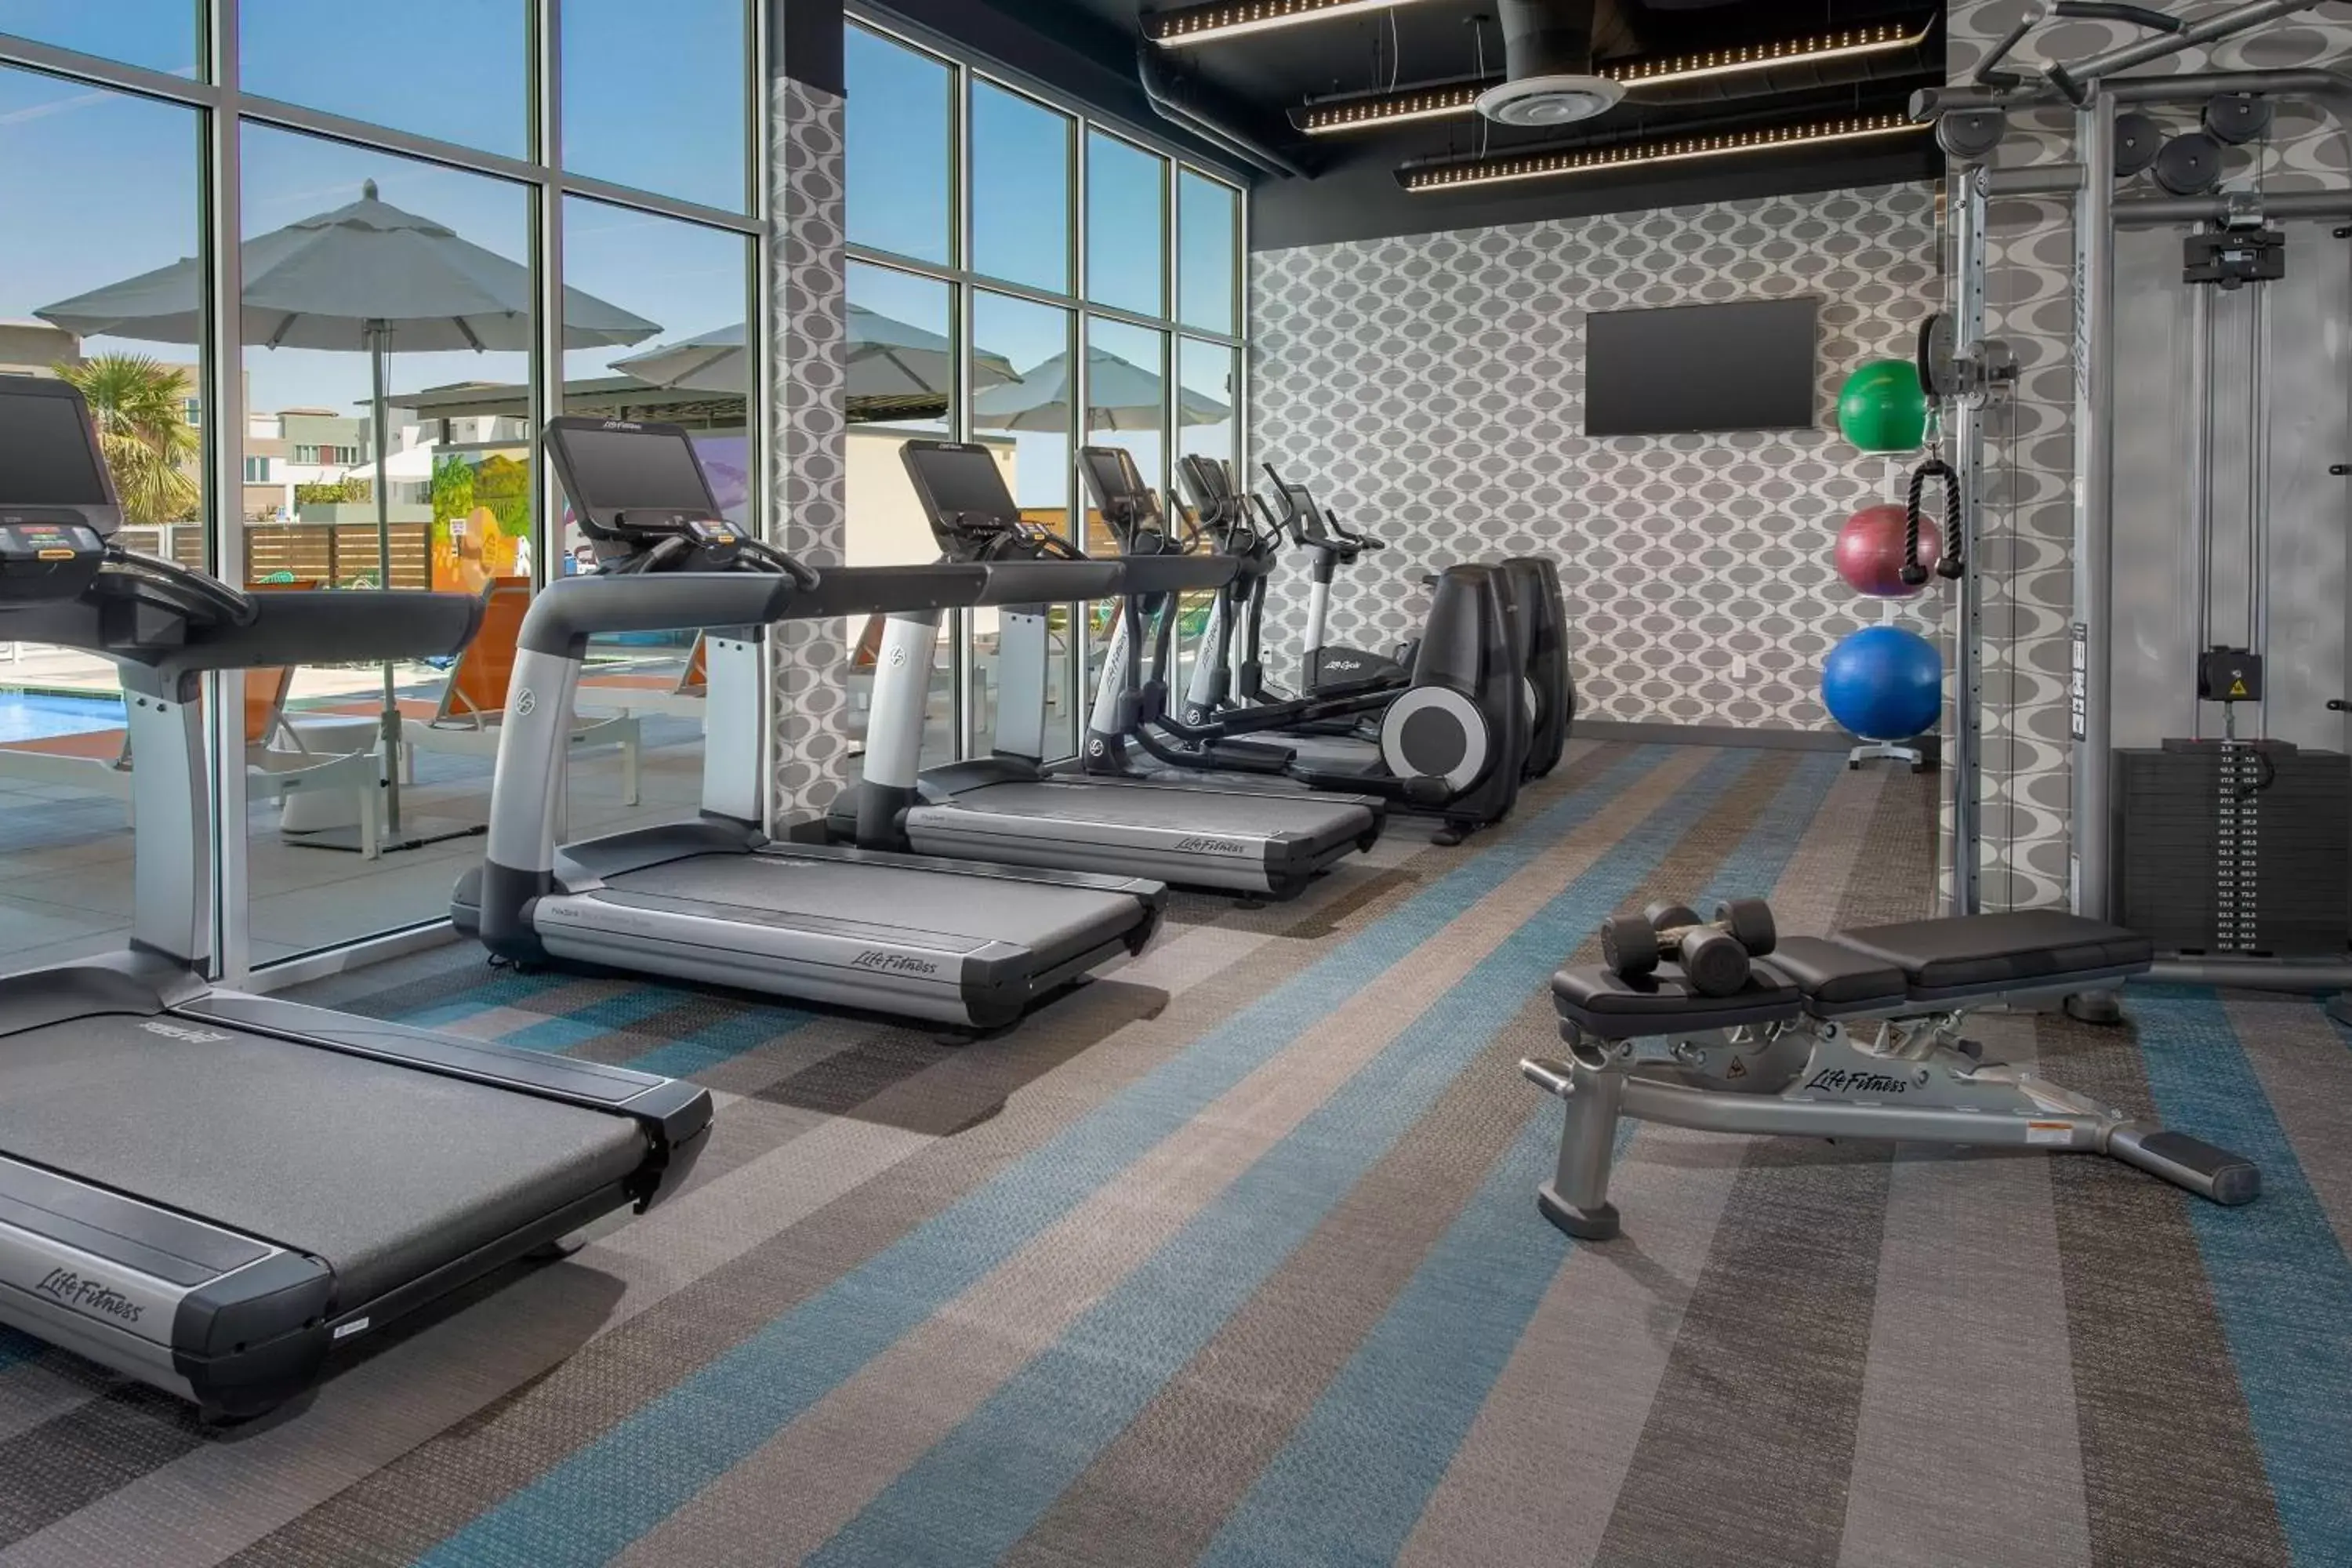 Fitness centre/facilities, Fitness Center/Facilities in Aloft Dallas Arlington South